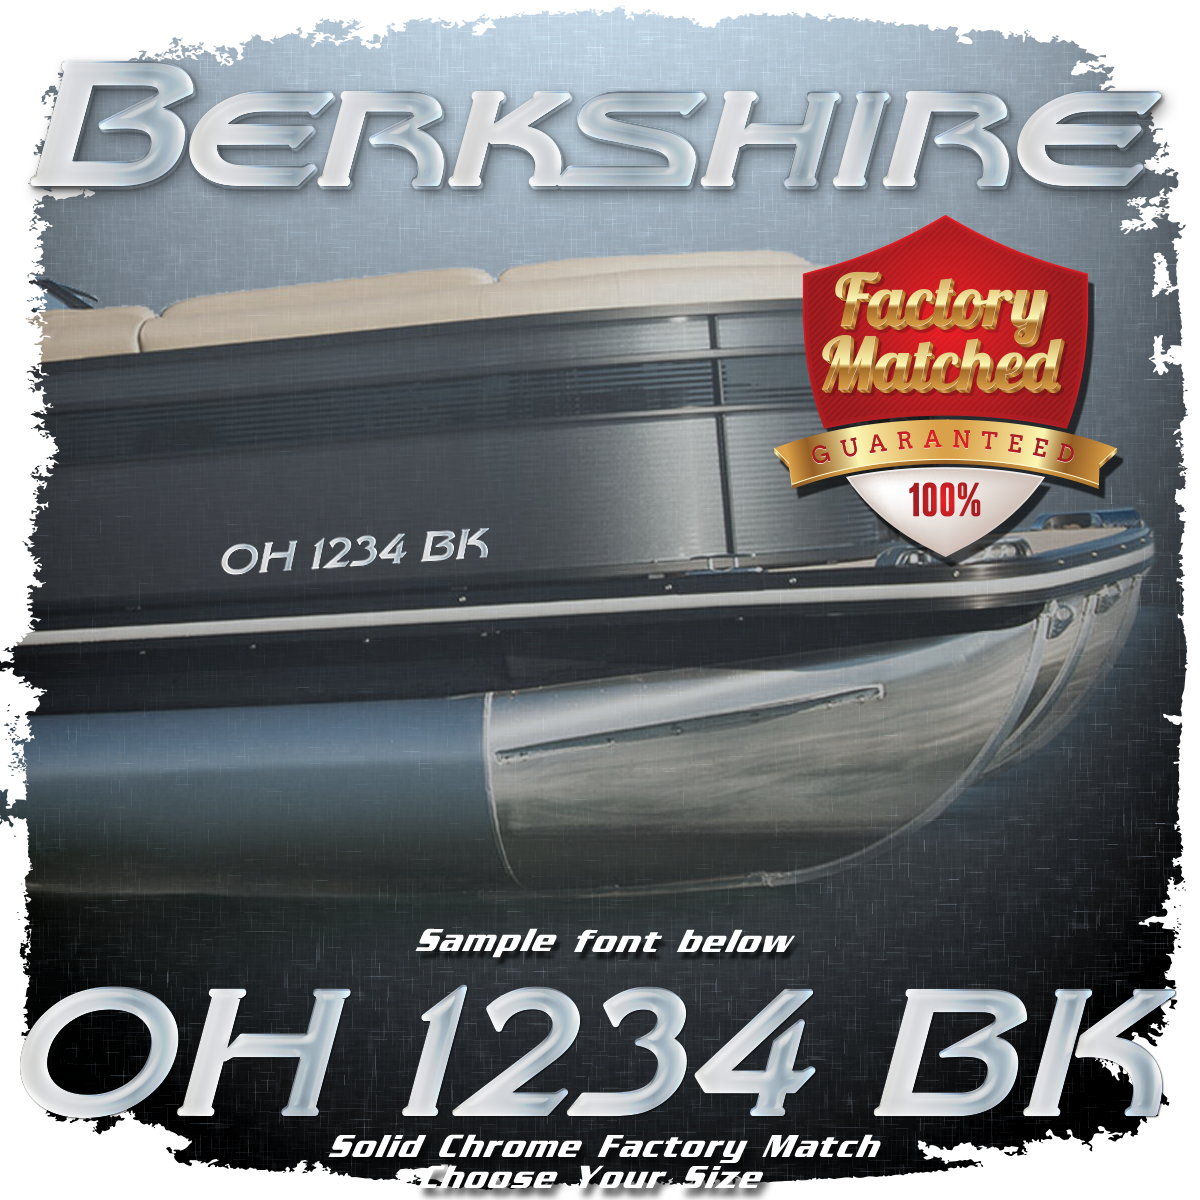 Berkshire Logo Style #2 Registration (2 included), Chrome